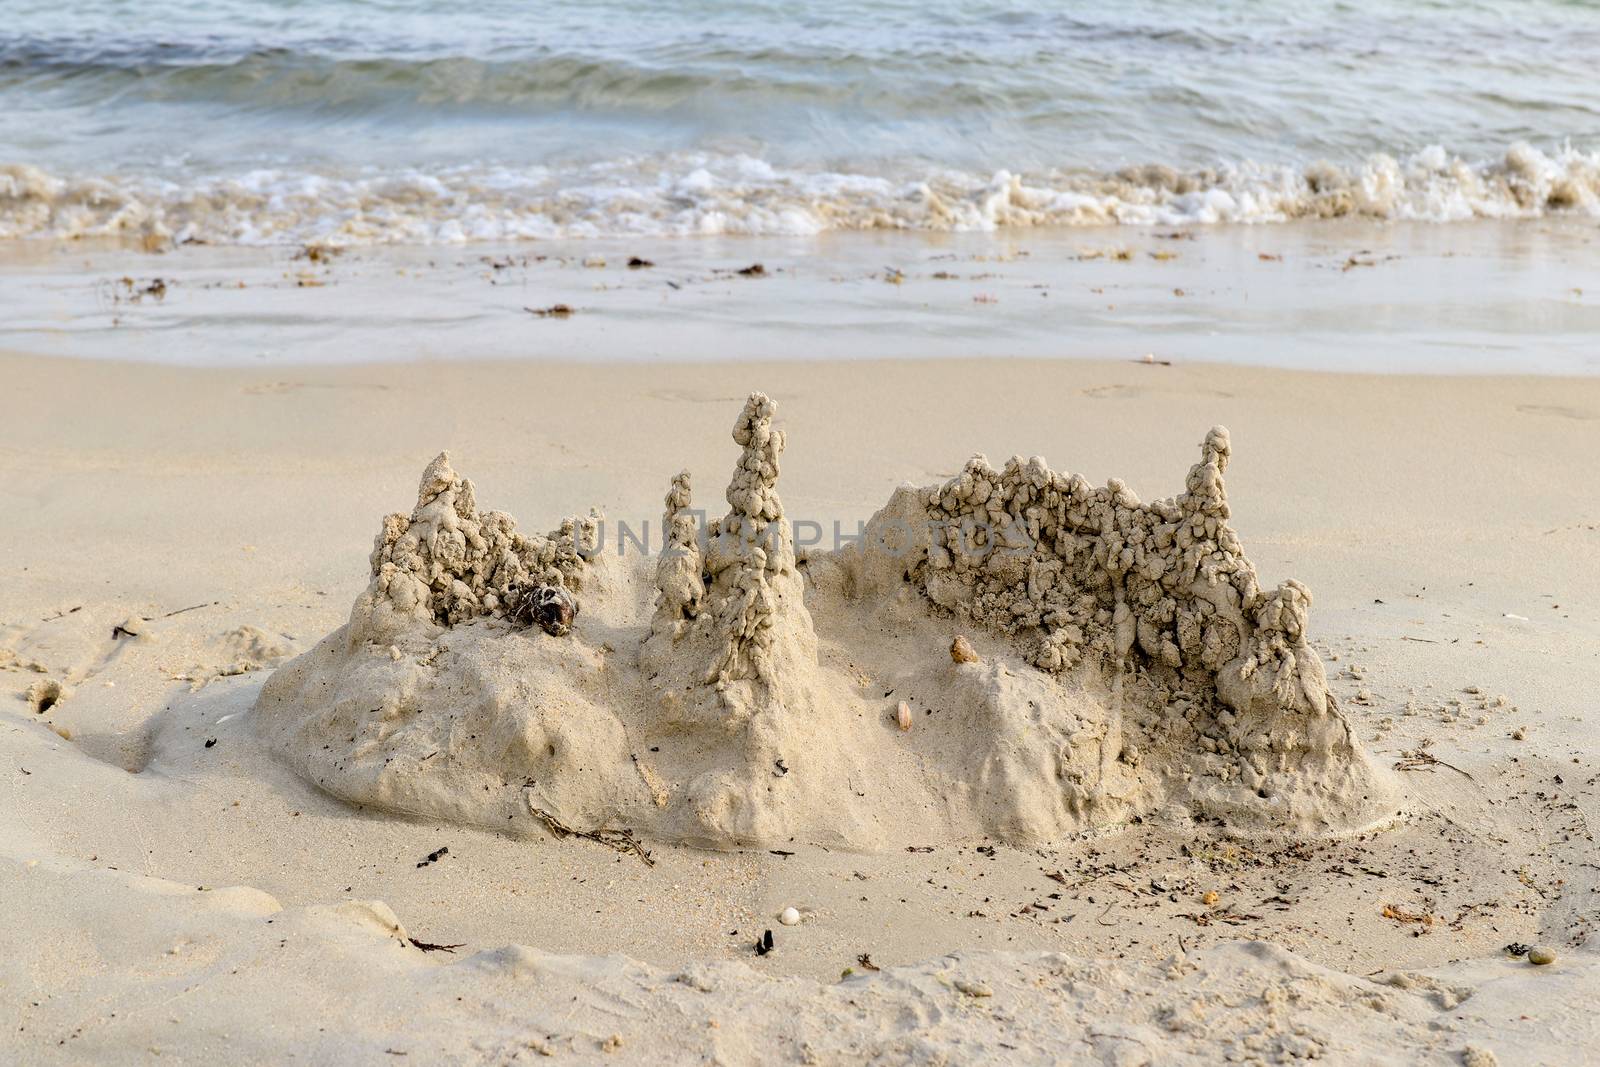 Sand castle on the beach by Mibuch